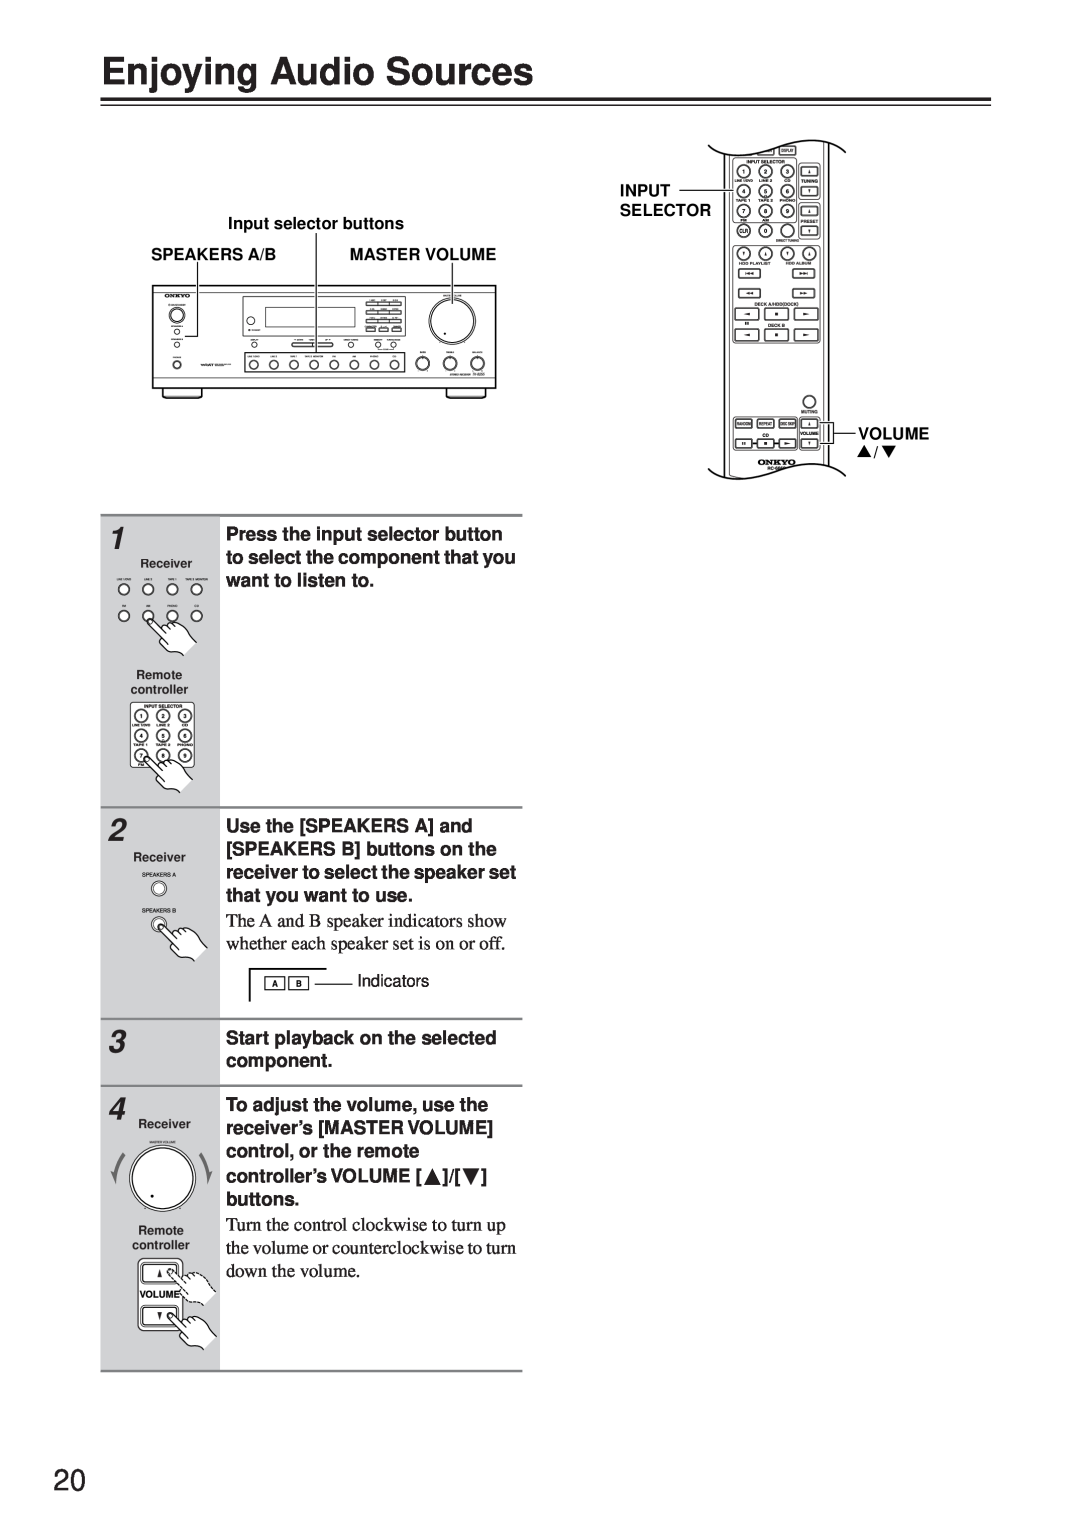 Onkyo TX-8255 instruction manual Enjoying Audio Sources 